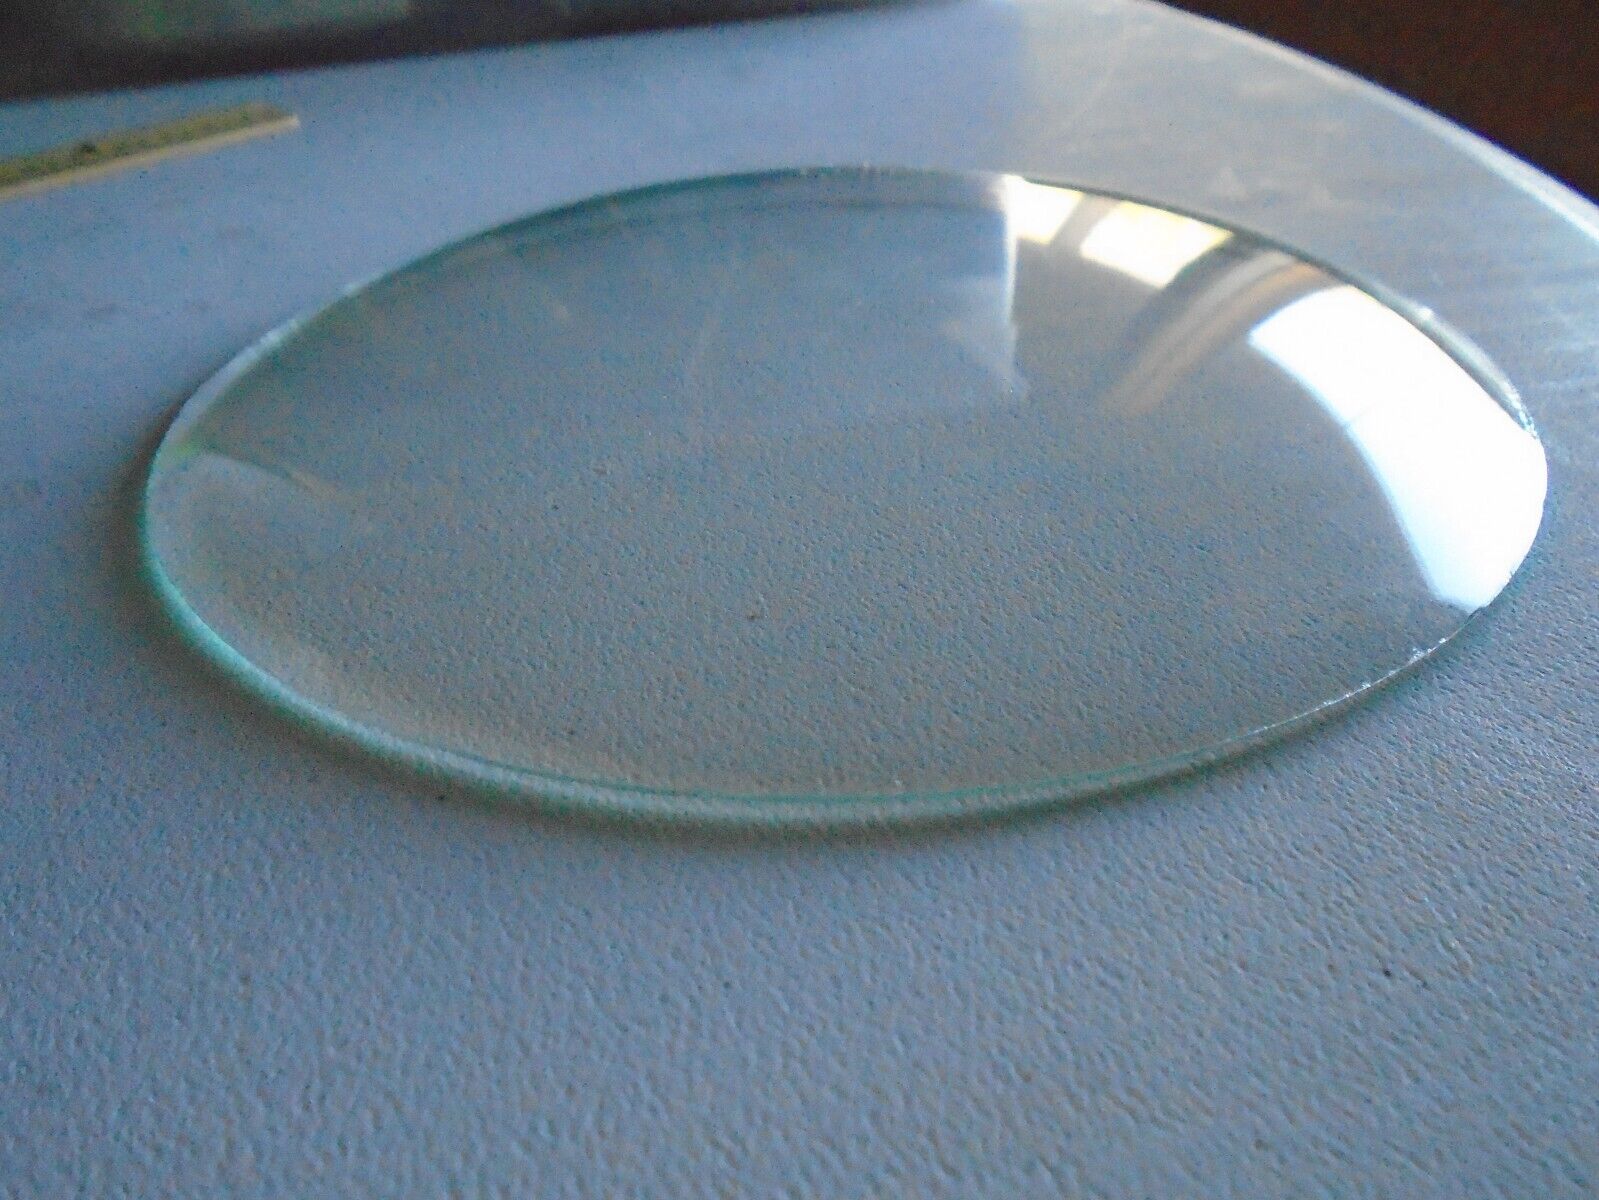 6.25 inch round convex glass